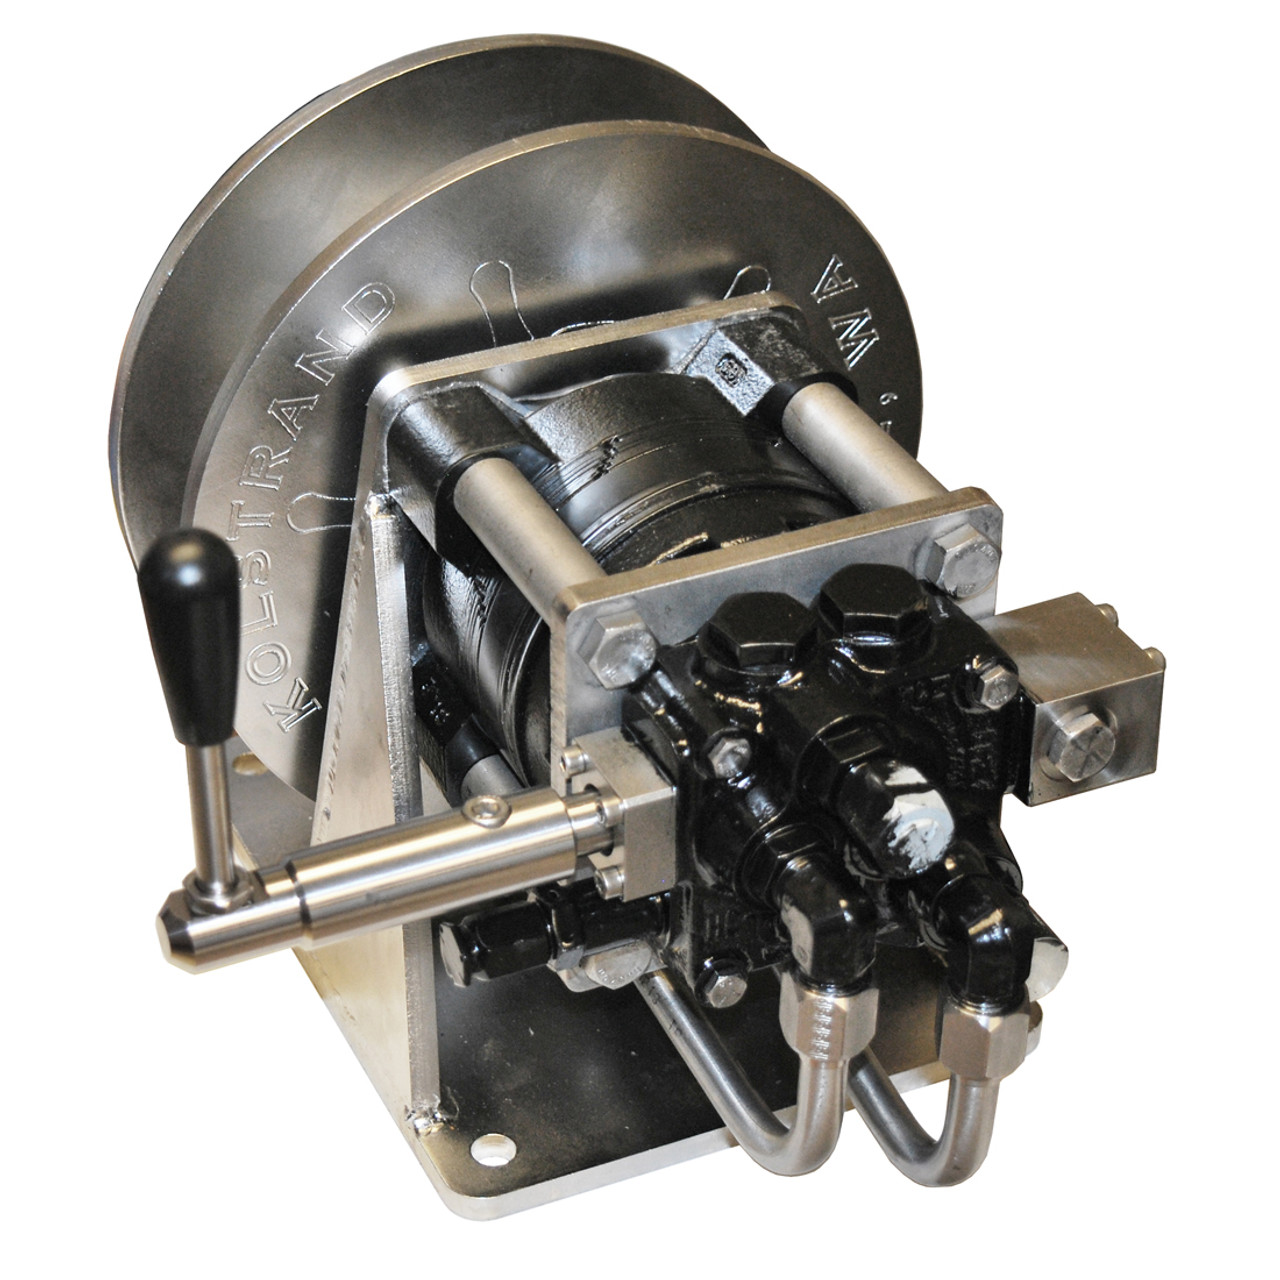 Kolstrand Ssngle spool stainless steel 'DINGLEBAR' rail-mount power gurdy/winch with rotary control valve